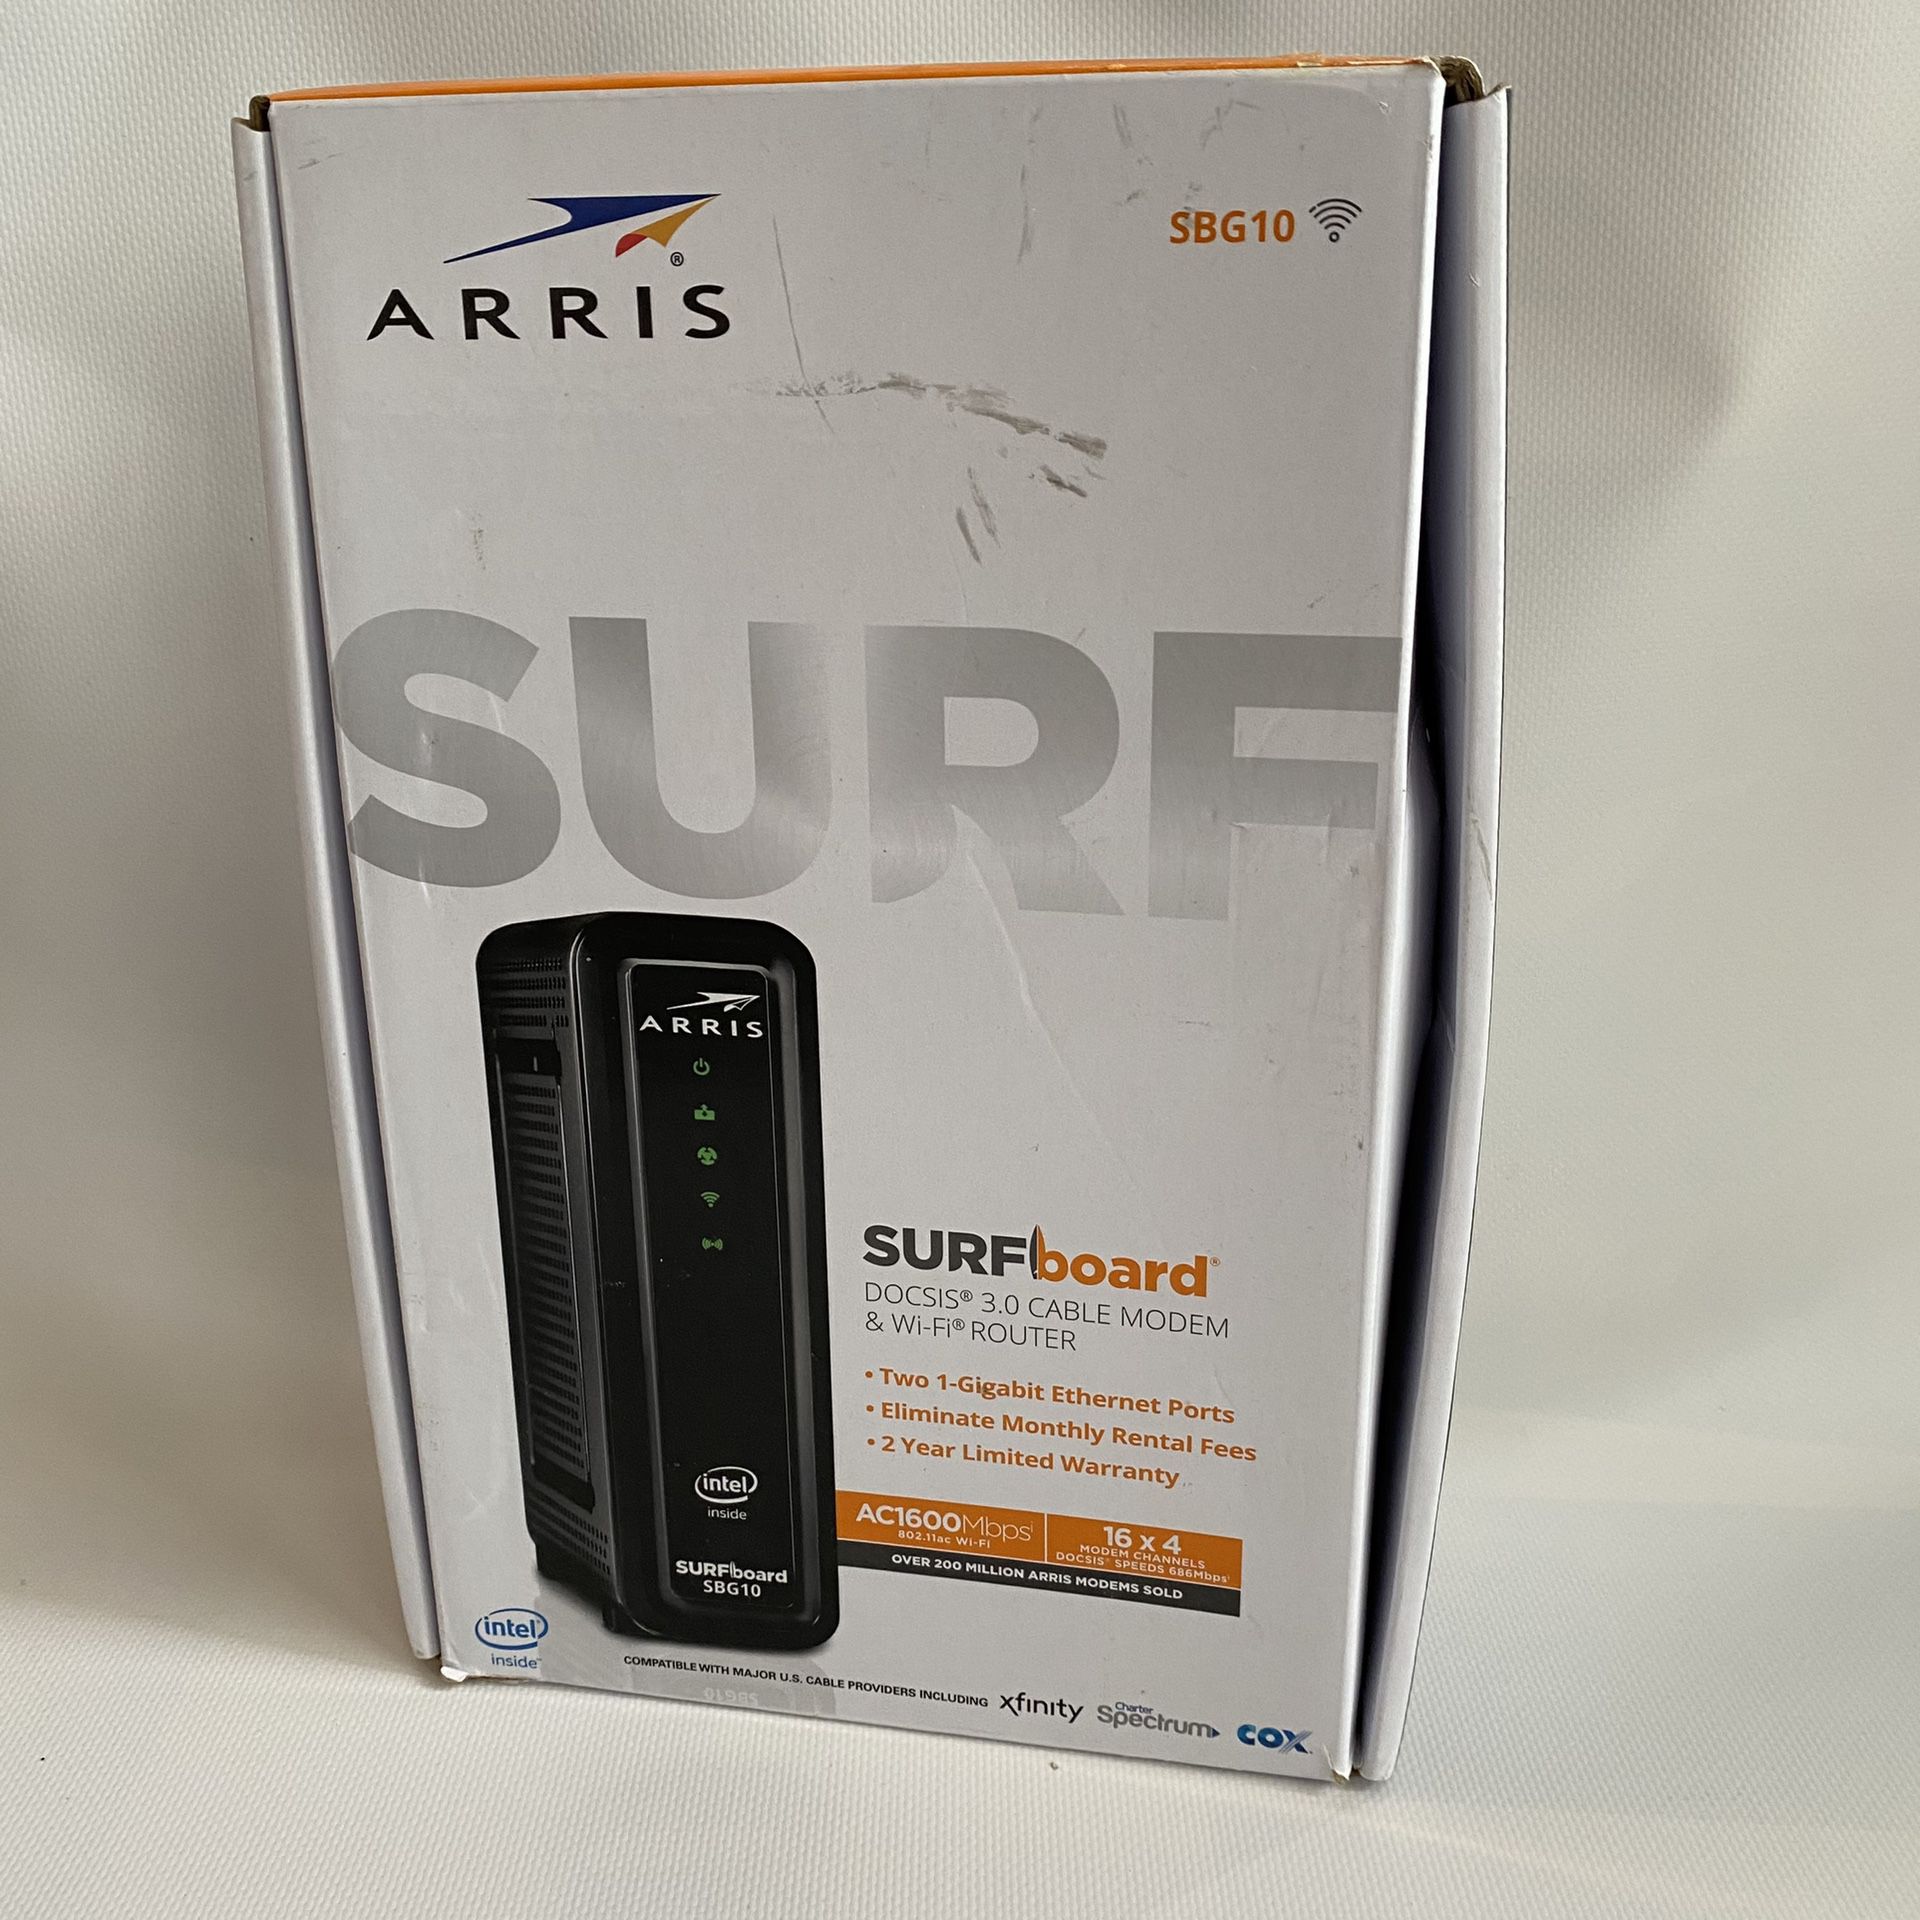 ARRIS Surfboard (16x4) Docsis 3.0 Cable Modem Plus AC1600 Dual Band Wi-Fi Router